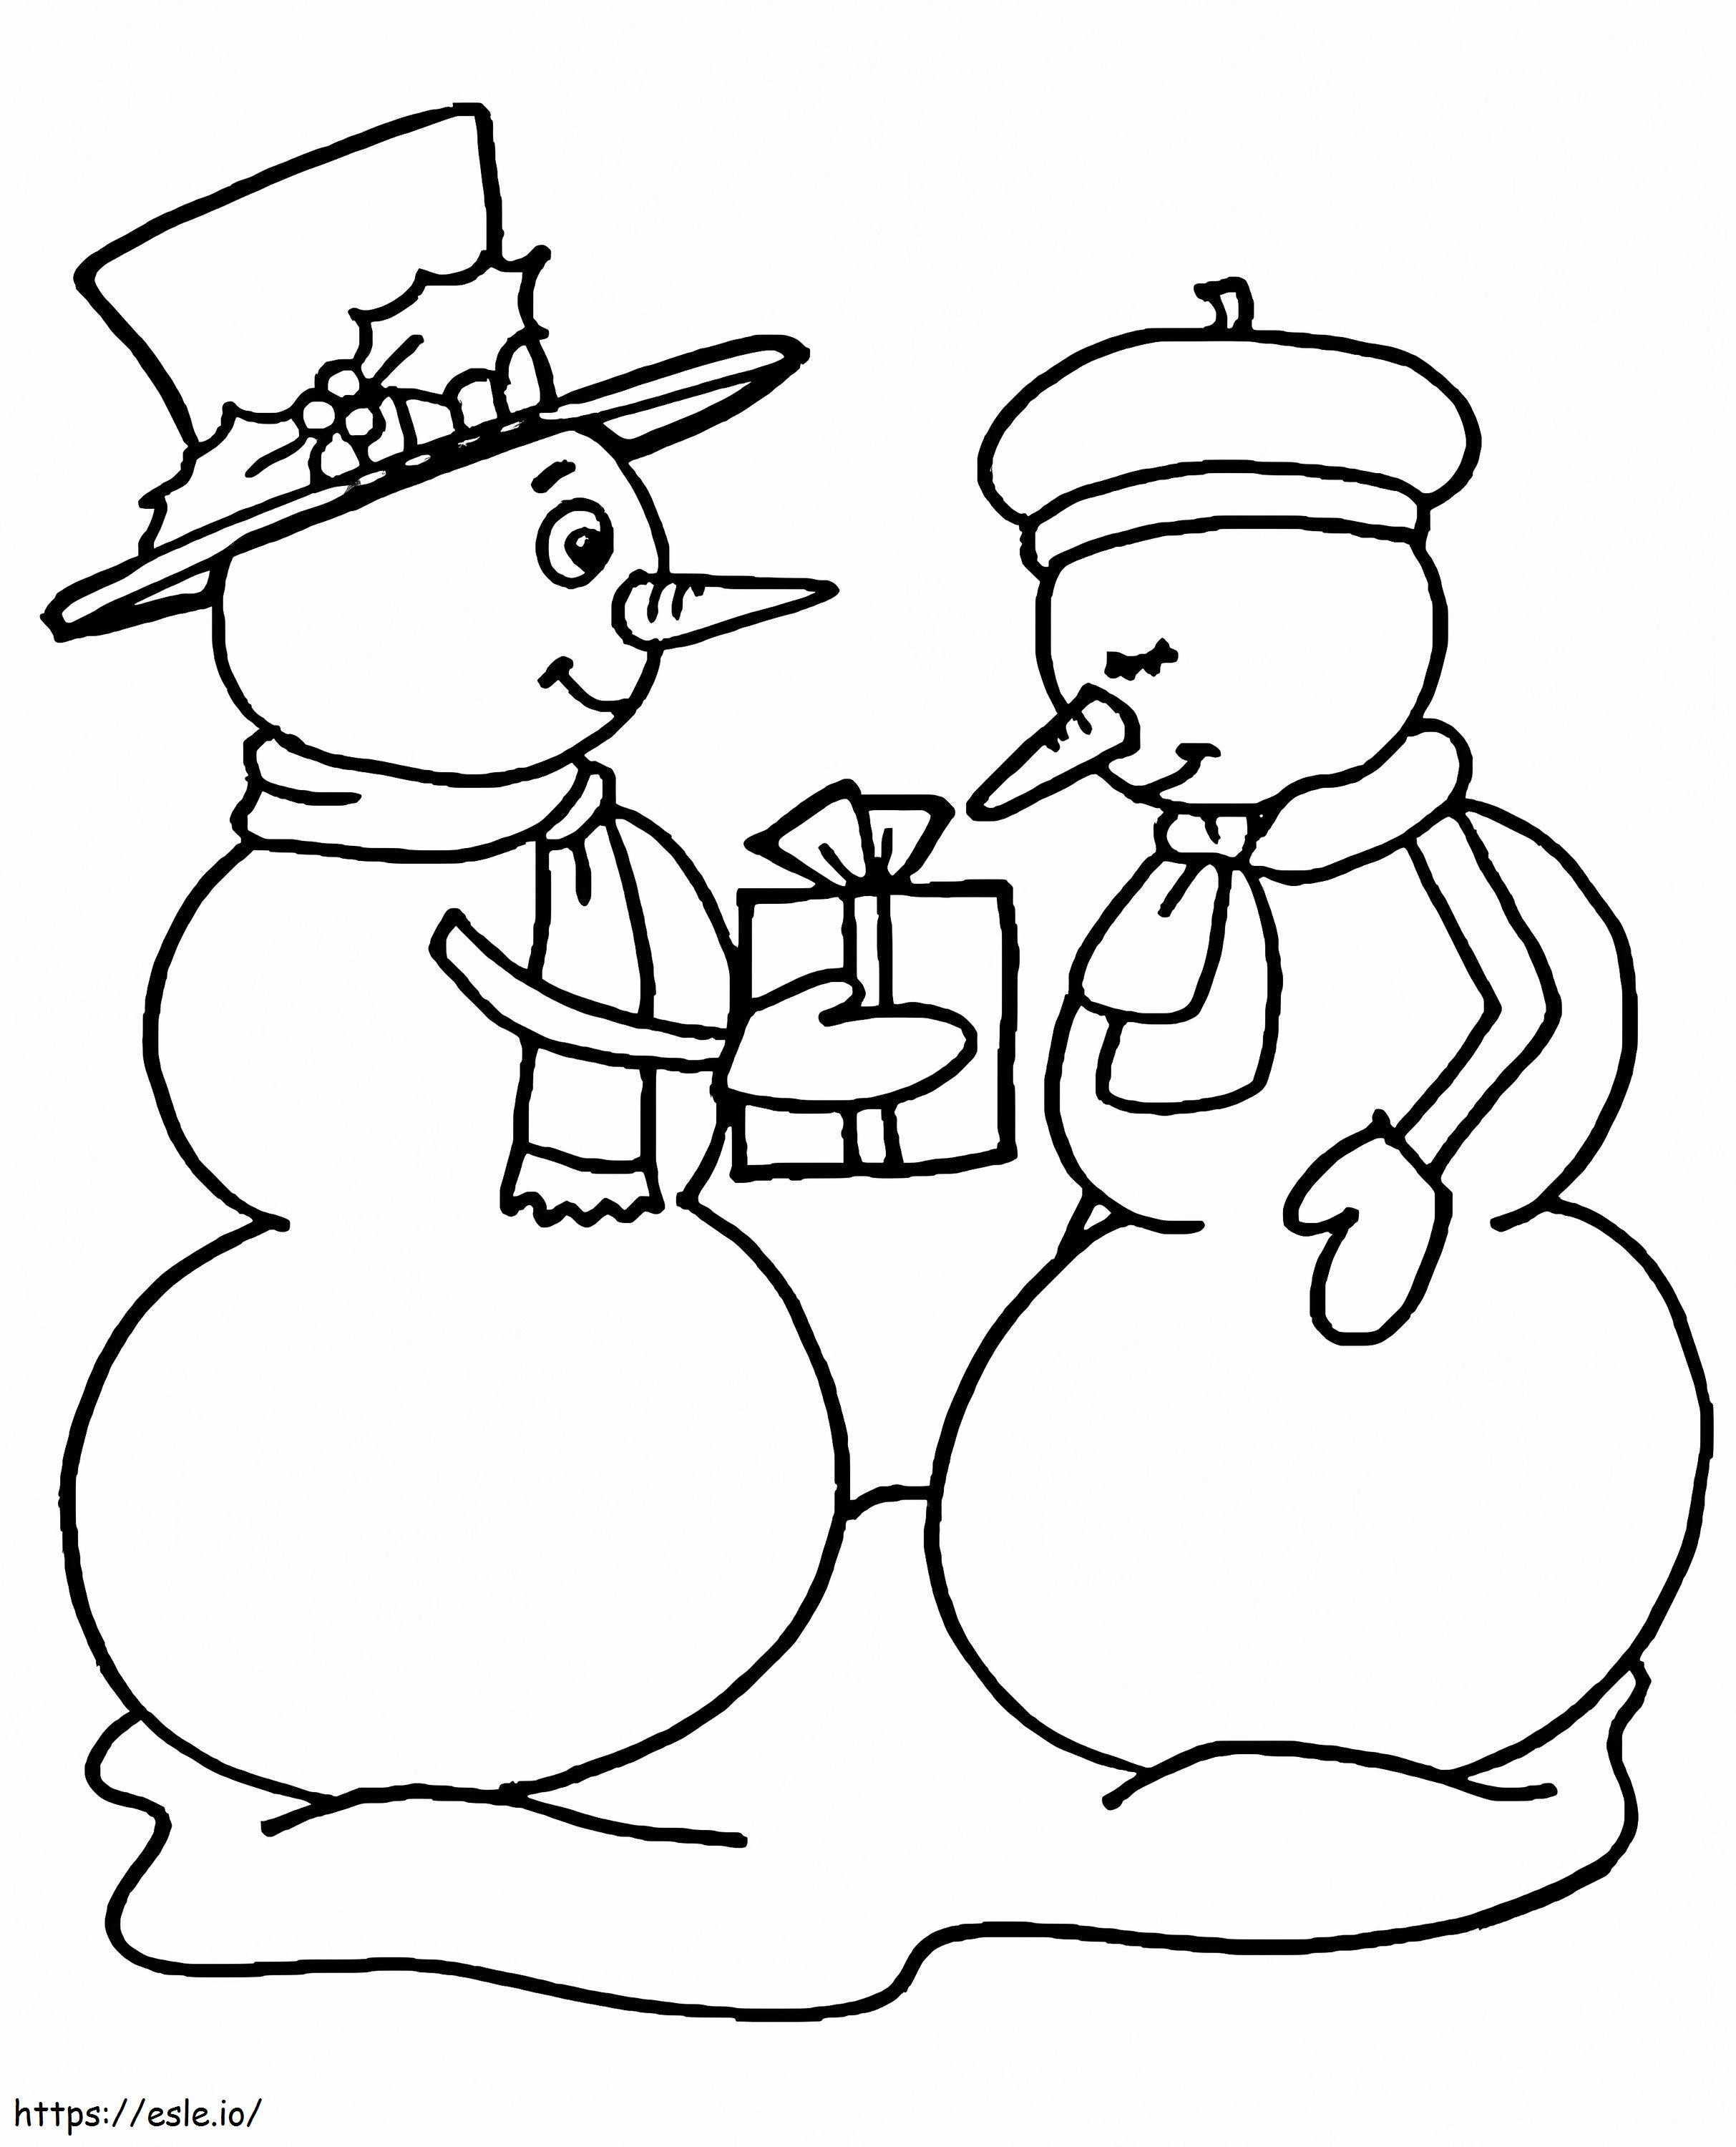 Snowman Couple coloring page